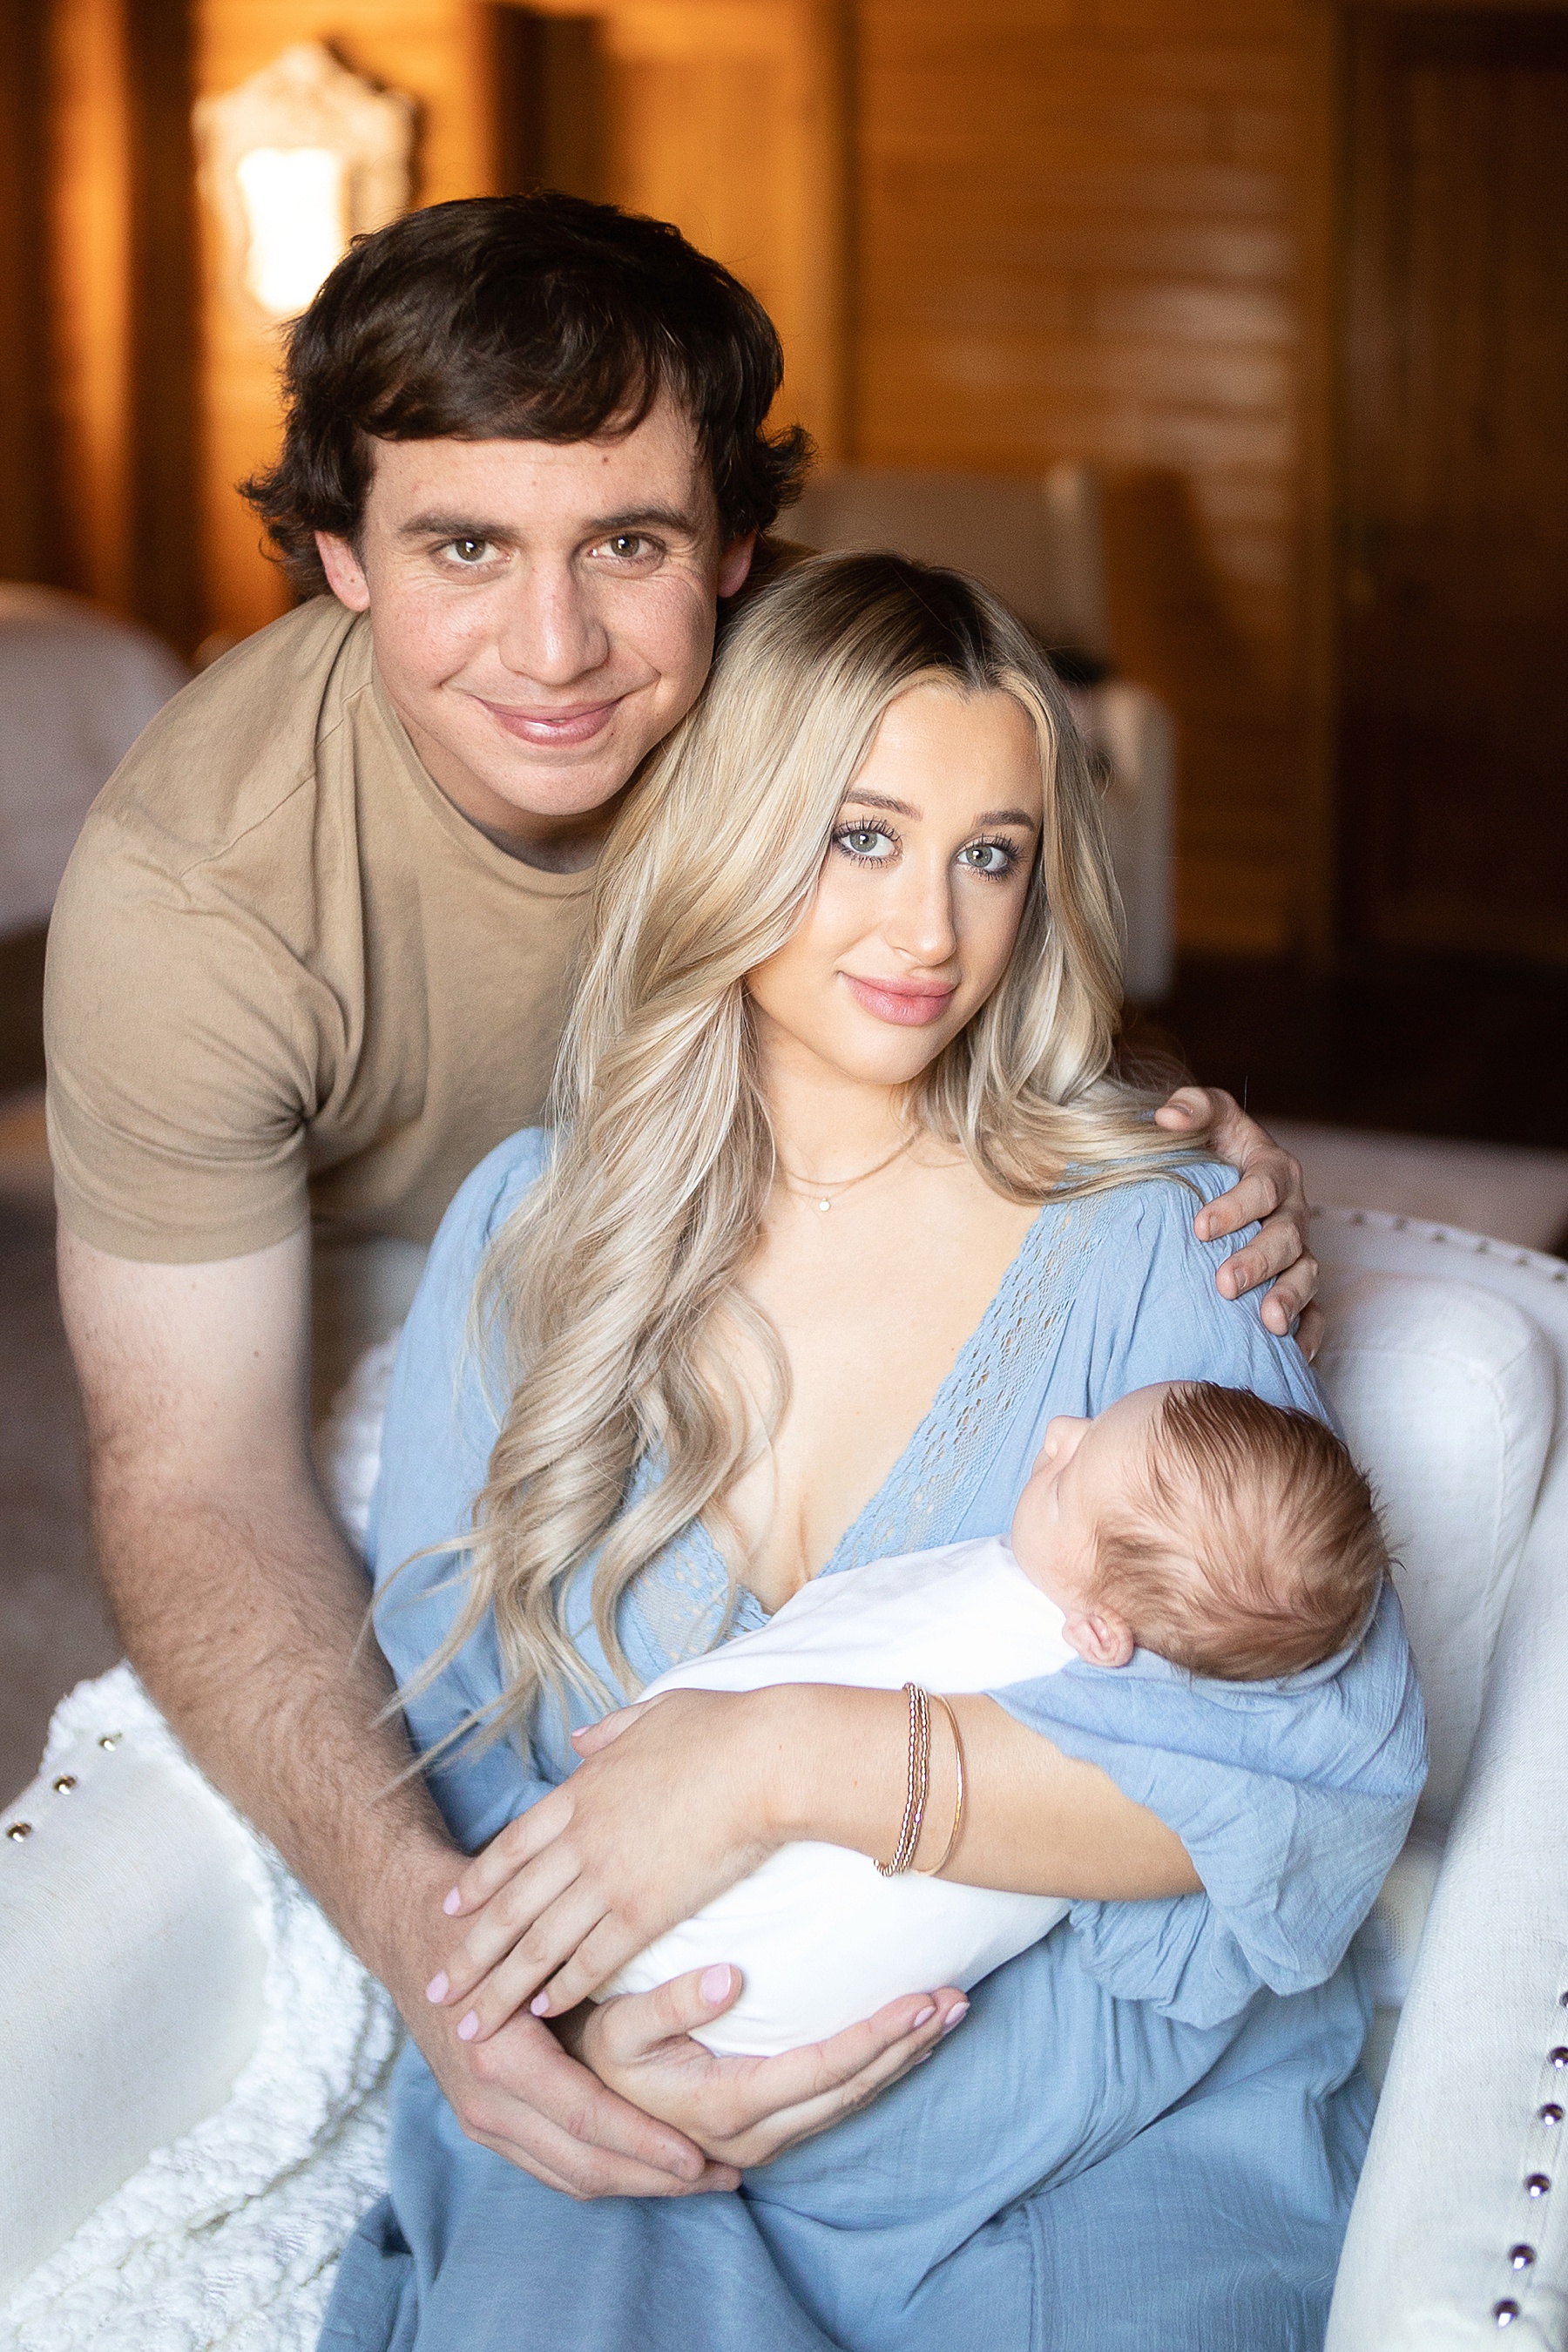 jacksonville couple holding newborn baby boy